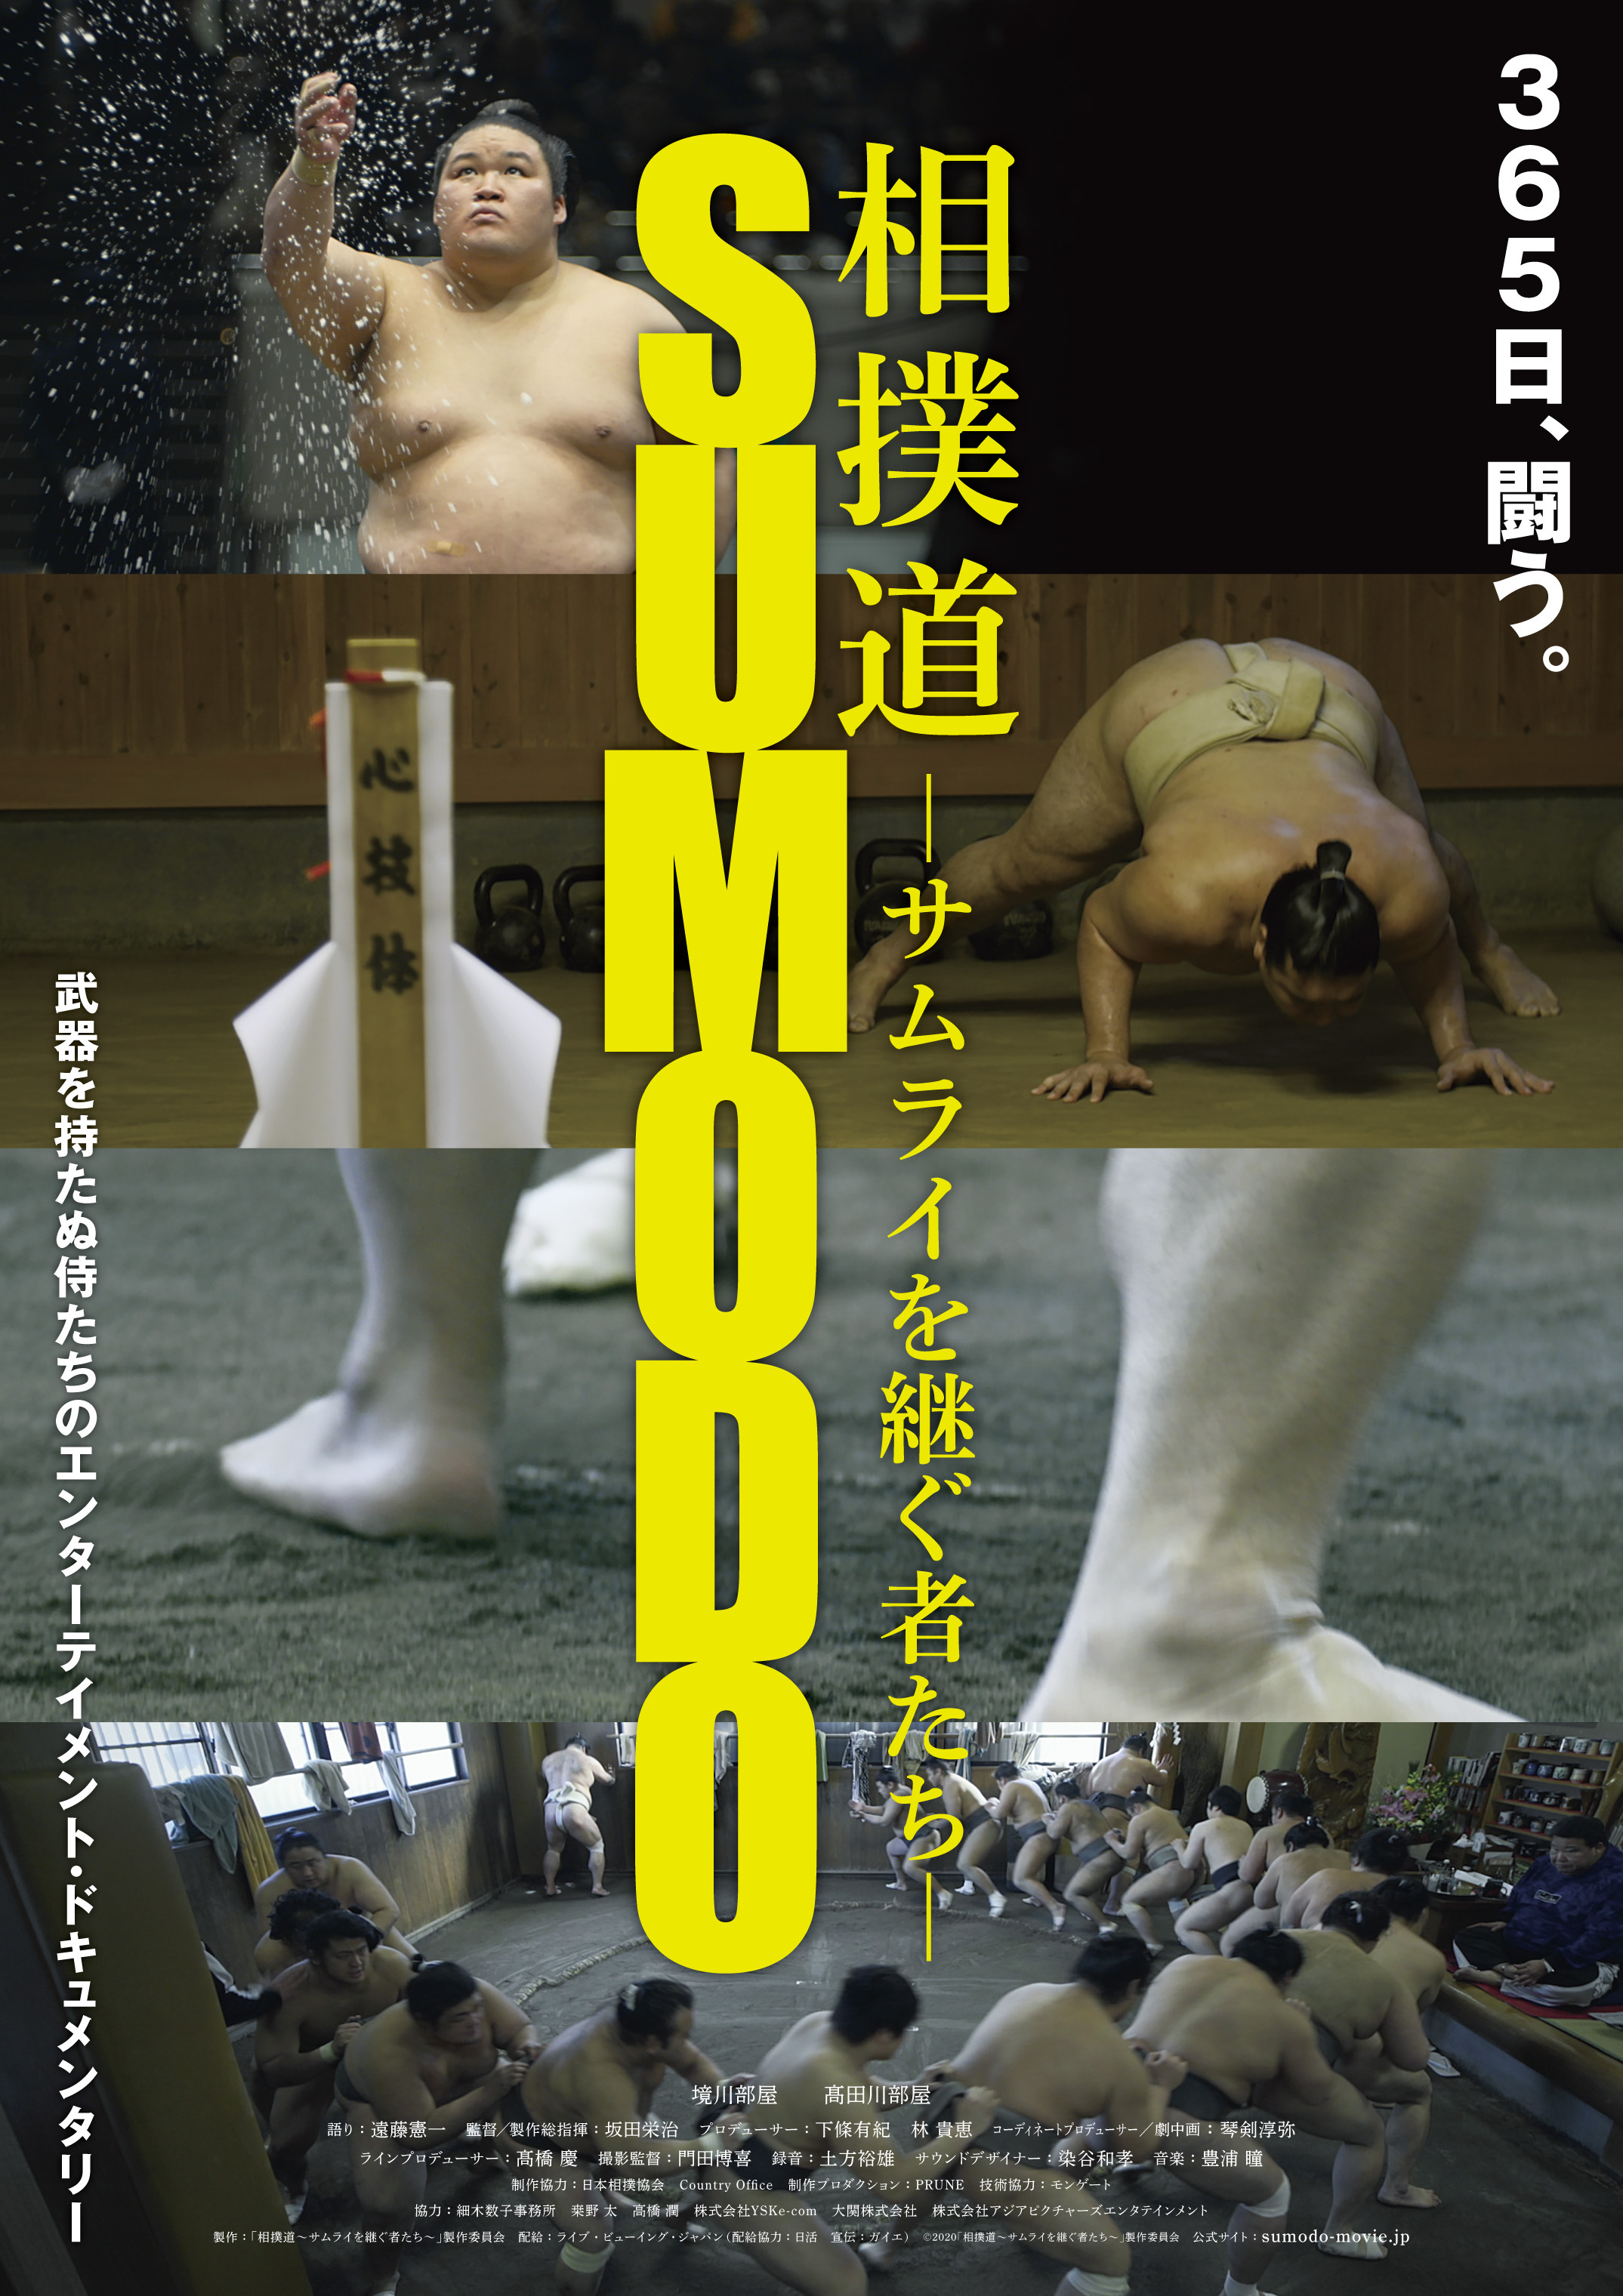 SUMODO ~The Successors of Samurai~ | Free Stone Productions Co., Ltd.